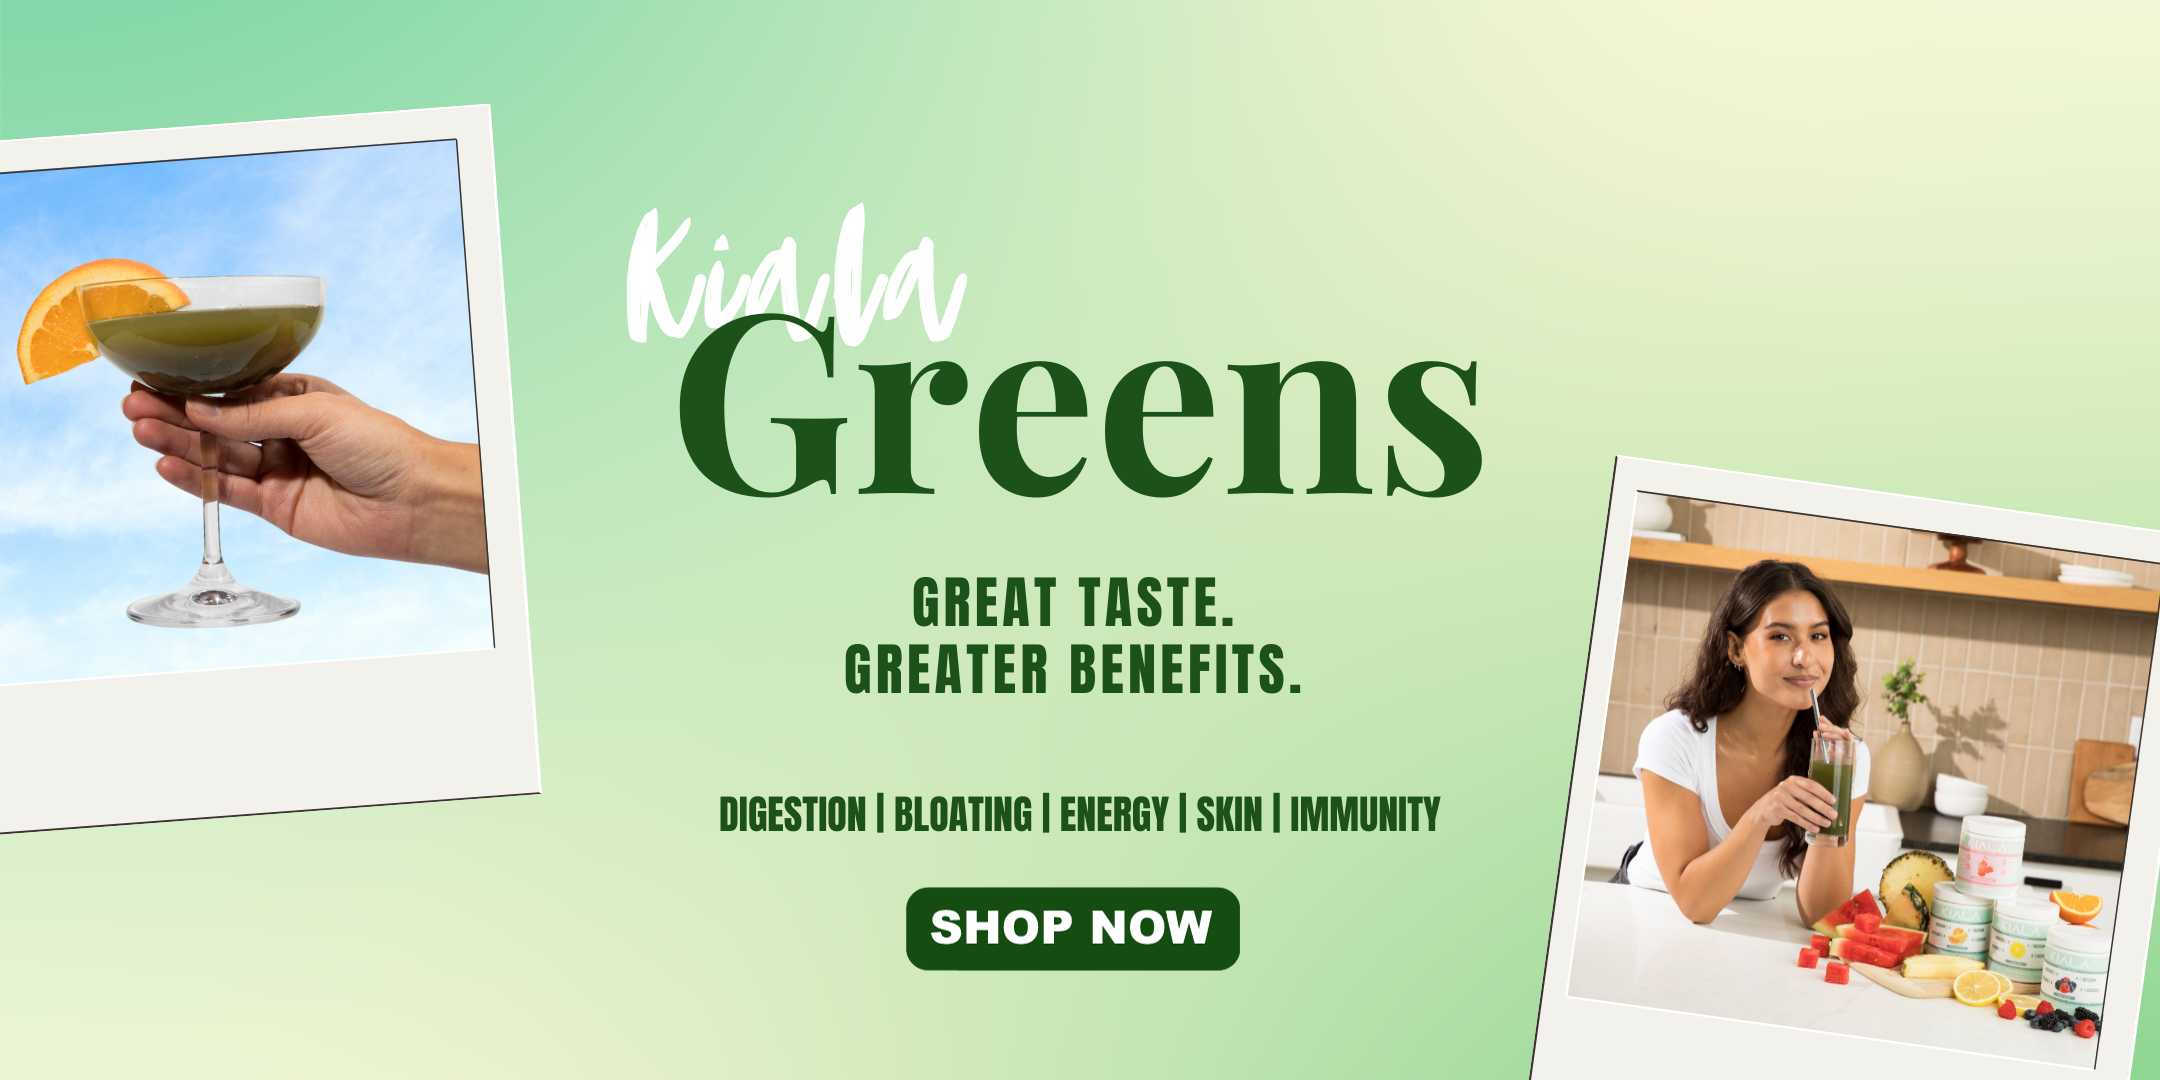 use gionna10 for 20% OFF #KIALA #kialagreens #health #debloat #greens